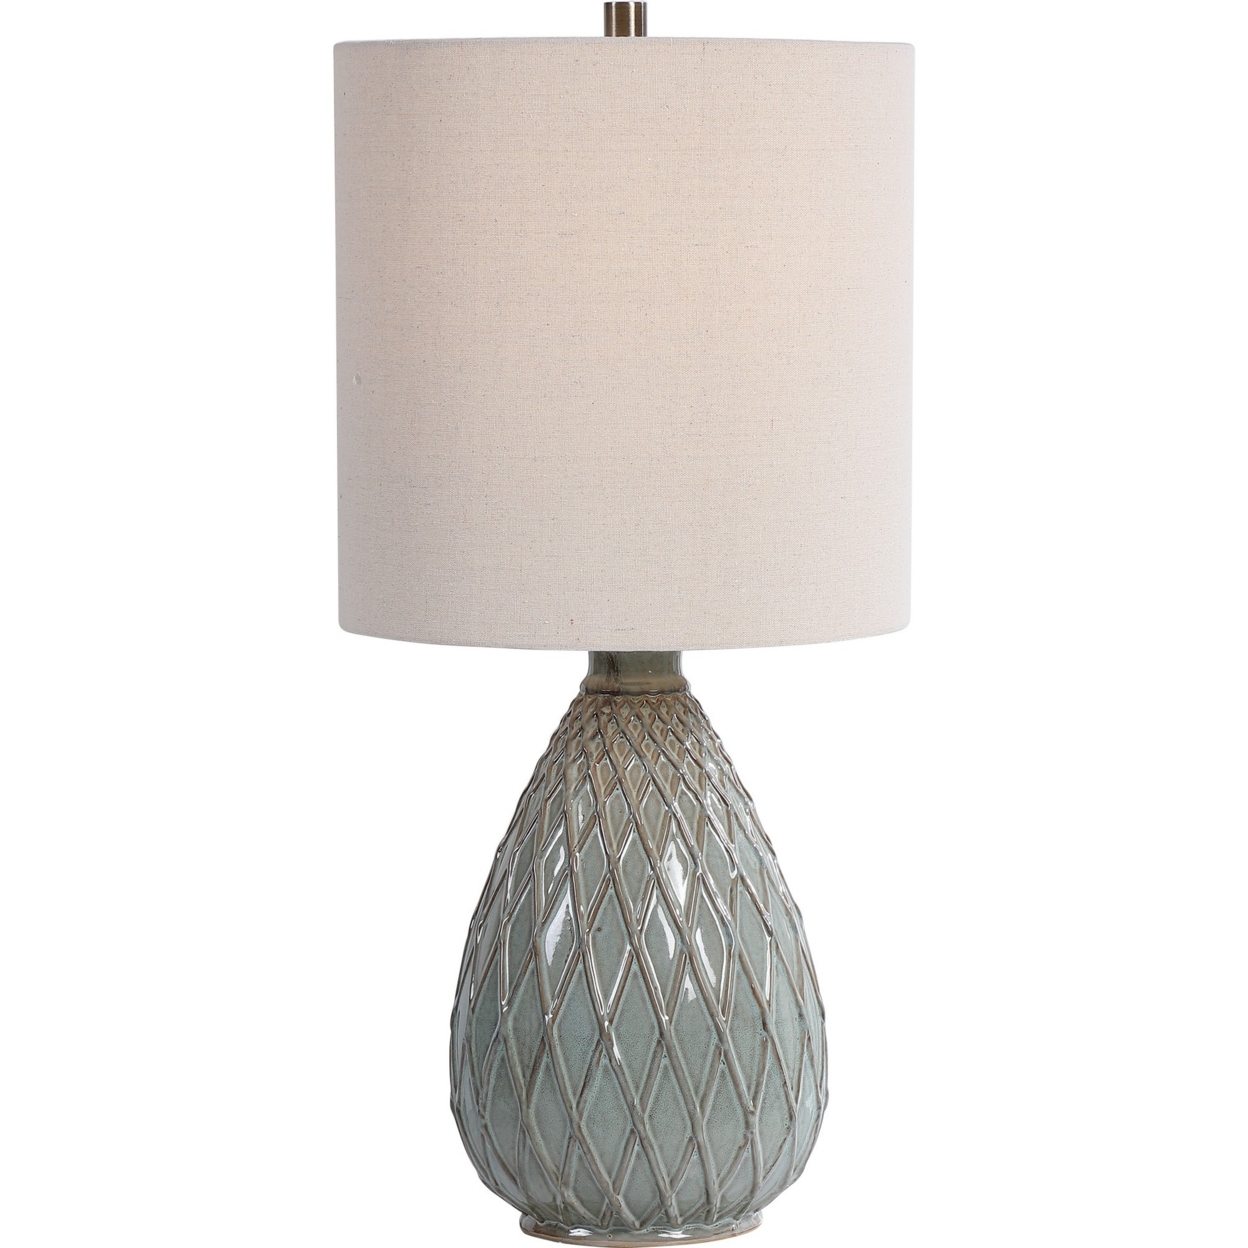 Pot Bellied Ceramic Table Lamp With Diamond Pattern, Gray- Saltoro Sherpi